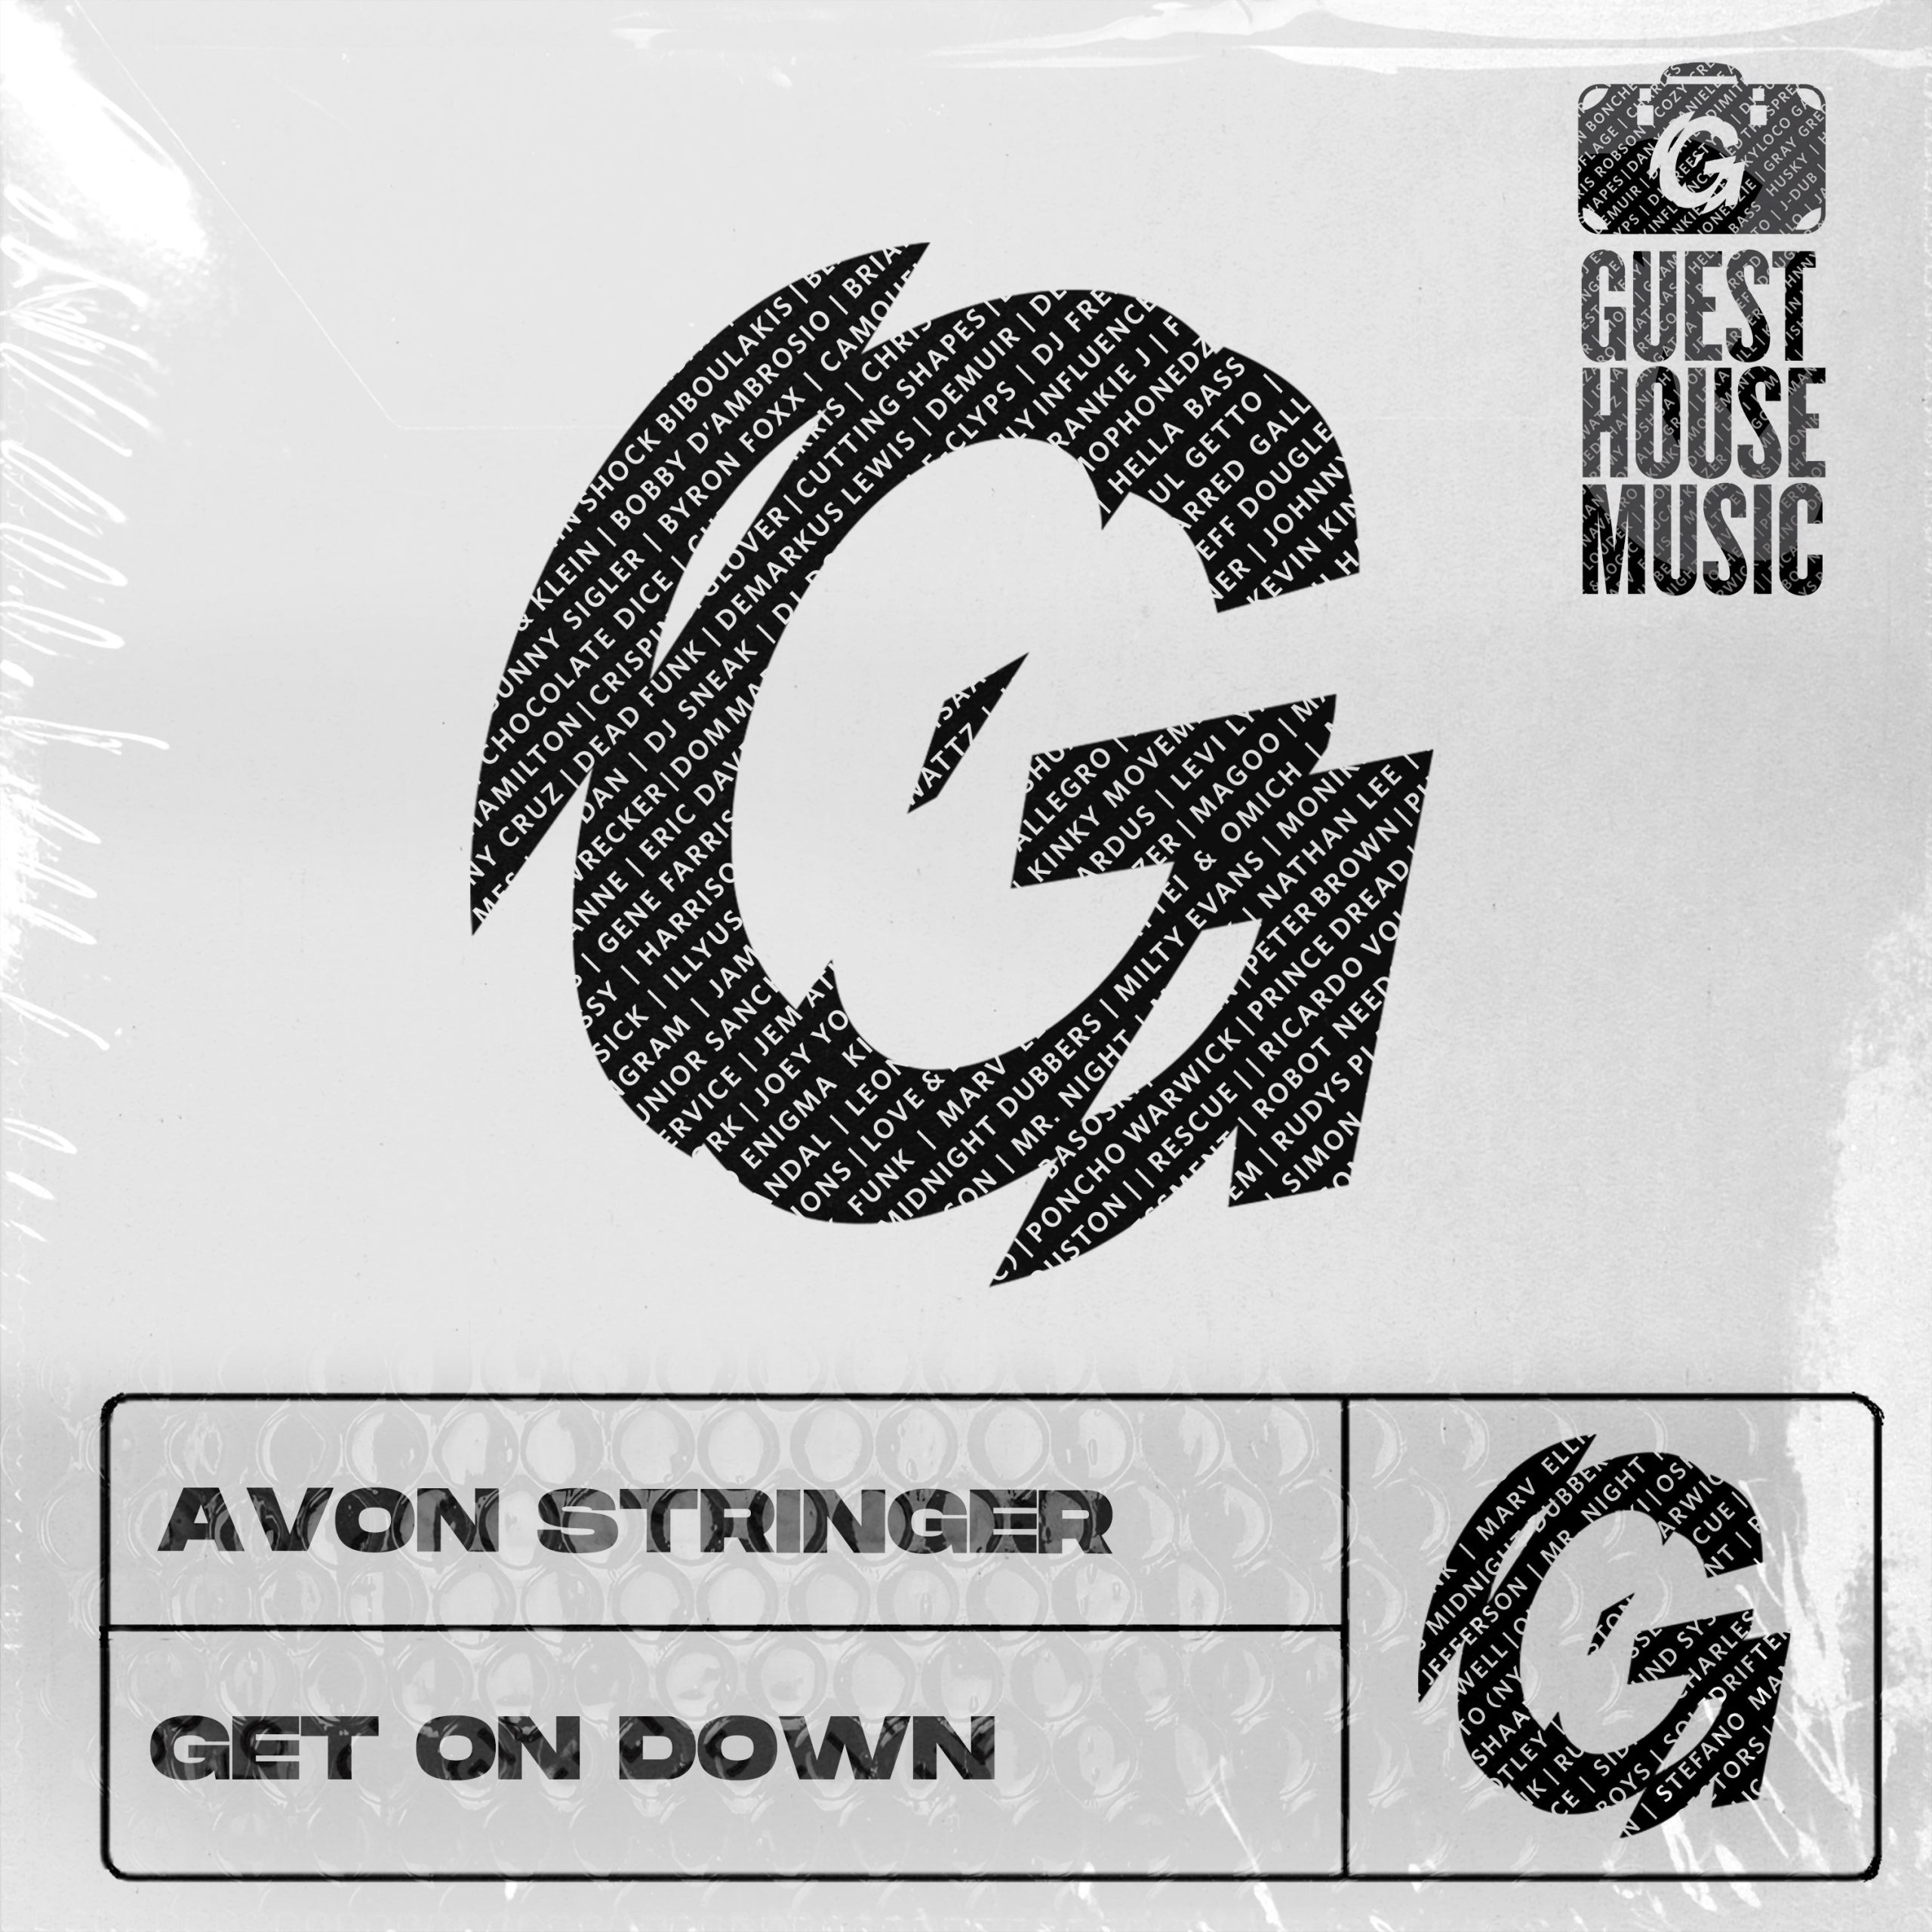 Avon Stringer “Get On Down”